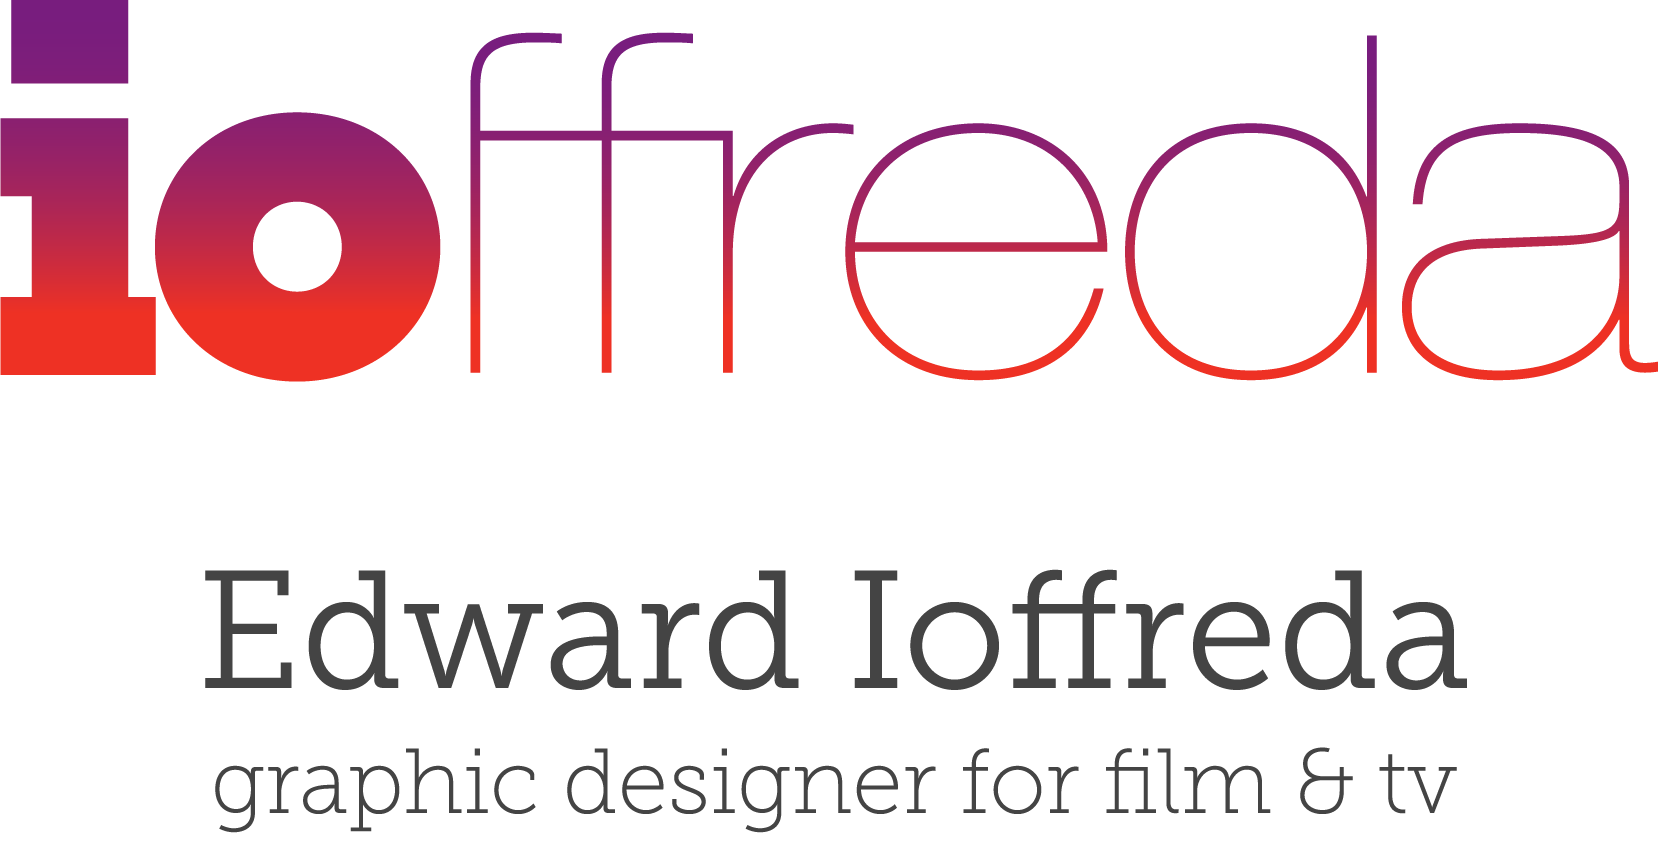 Edward Ioffreda, Graphic Designer for Film & TV